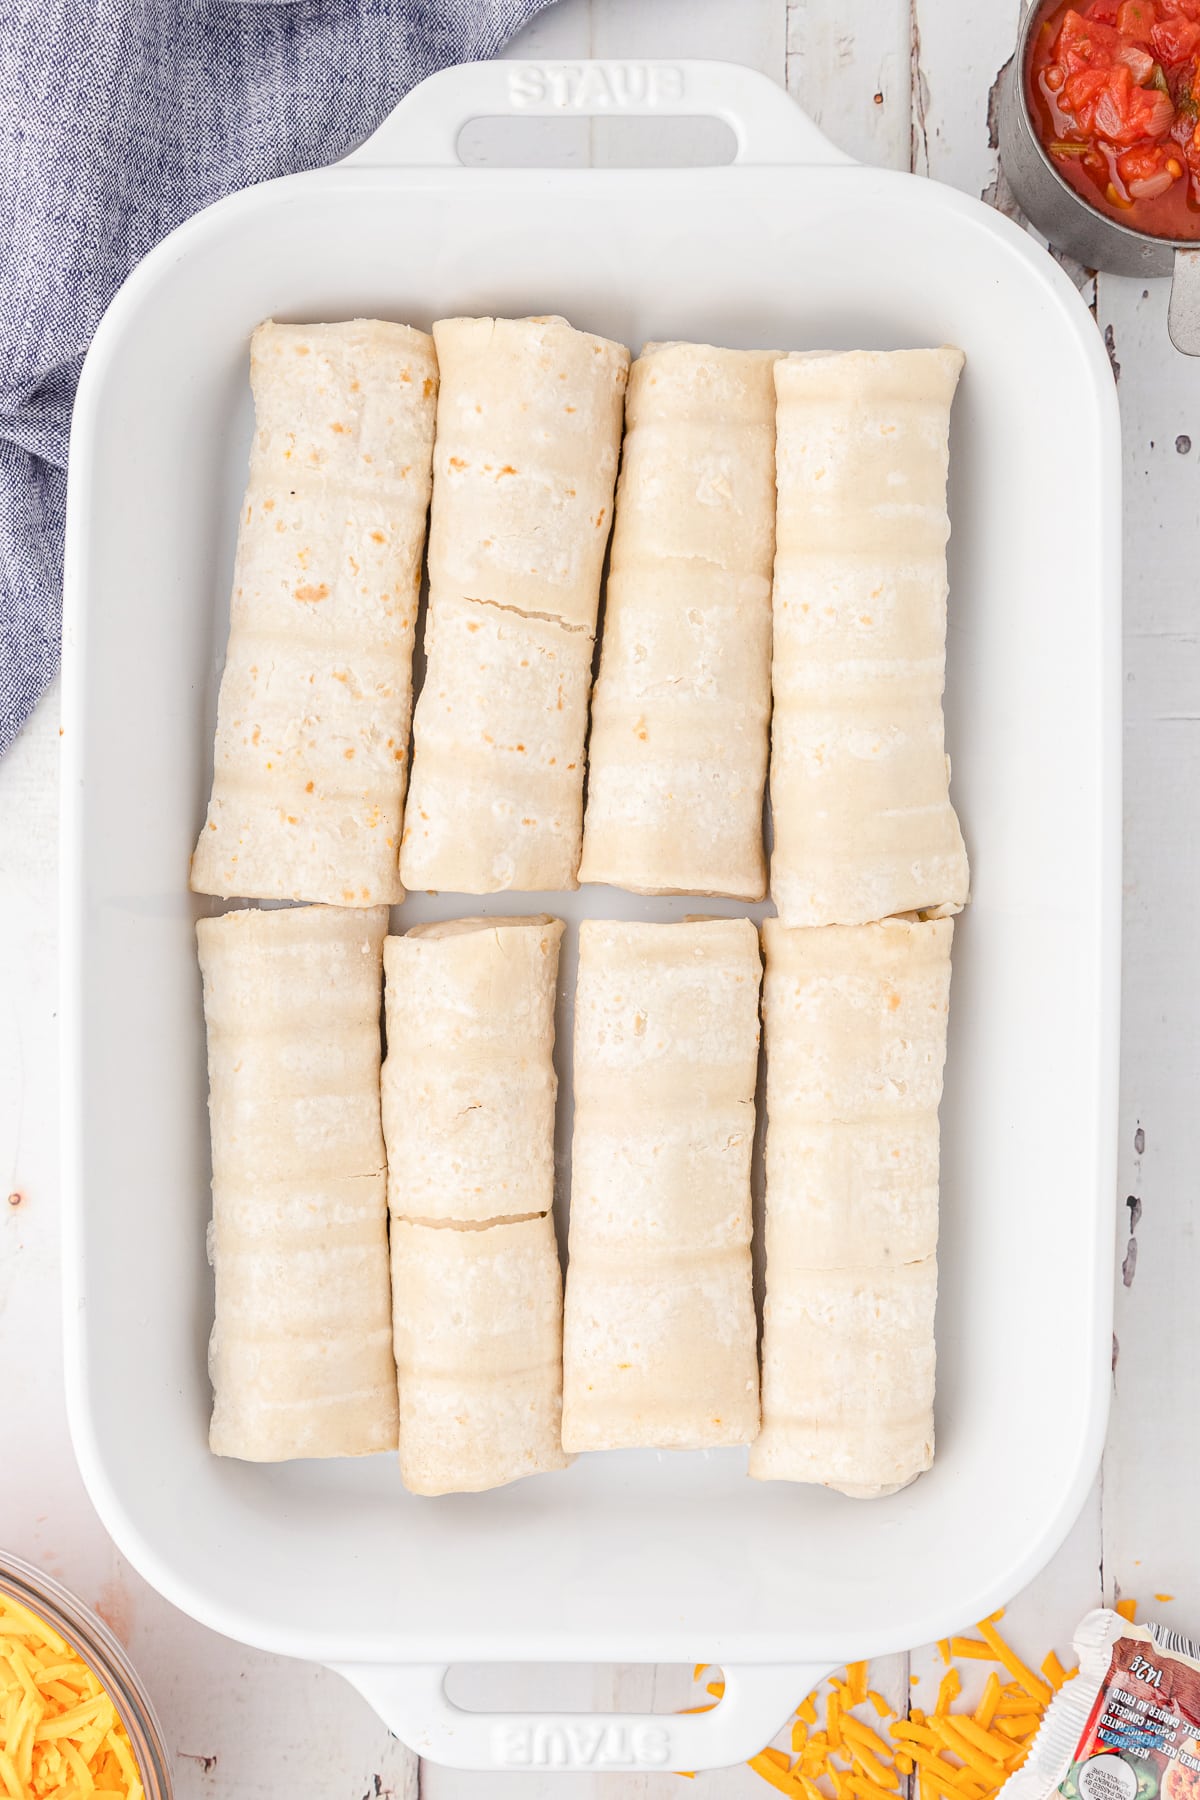 unwrapped frozen burritos in a white dish